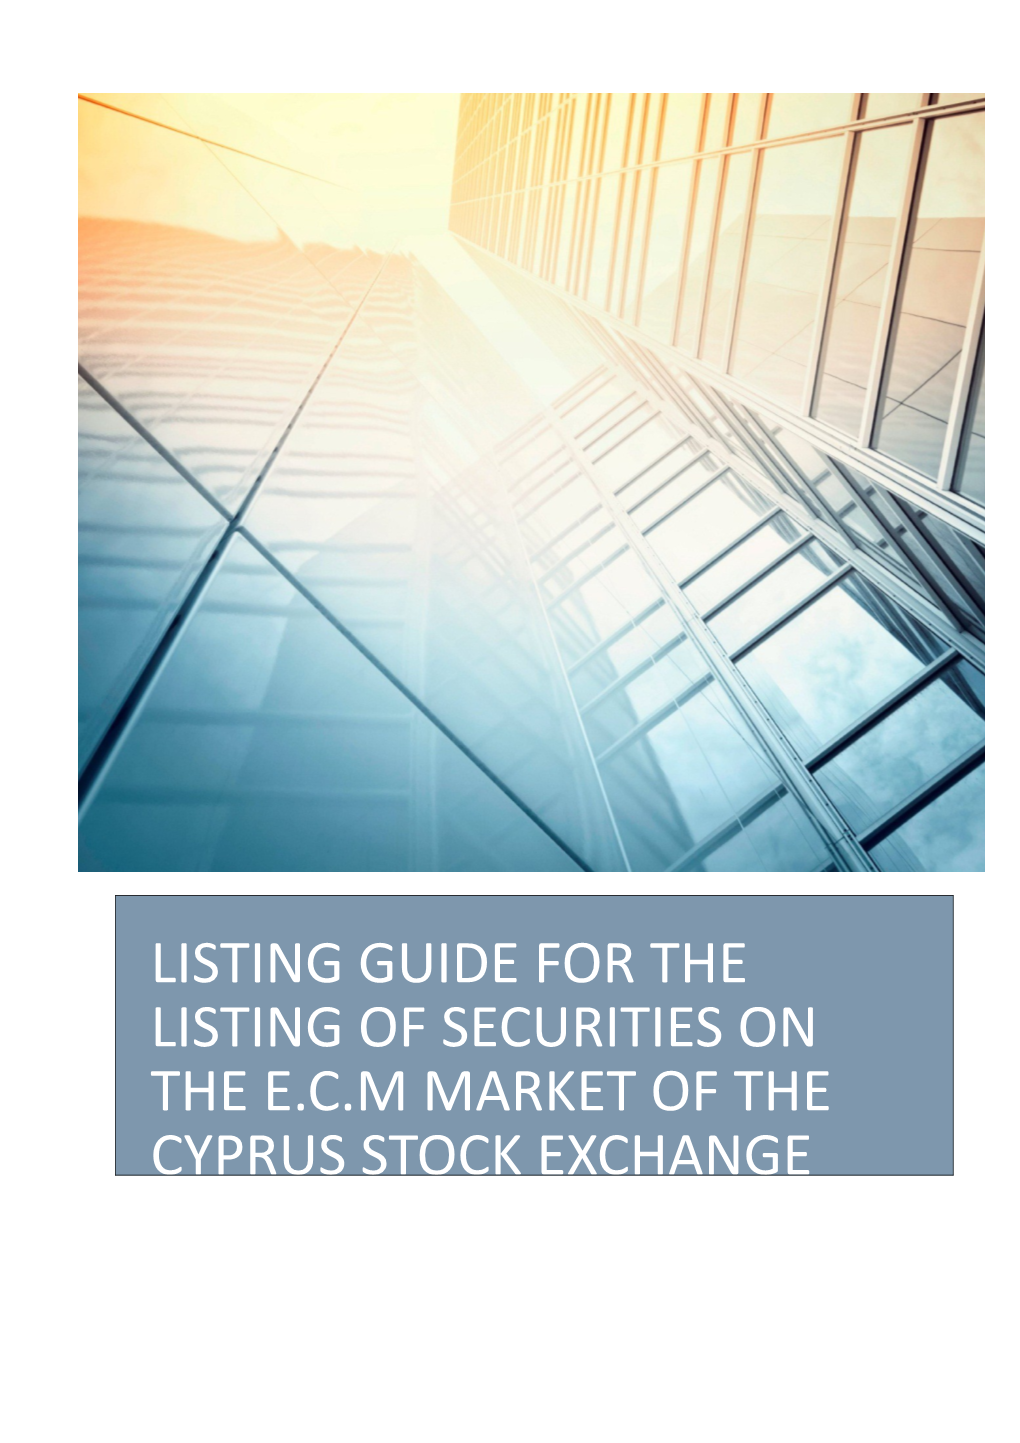 Forthe E.C.Mmarketof the Cyprus Stock Exchange(Cse)